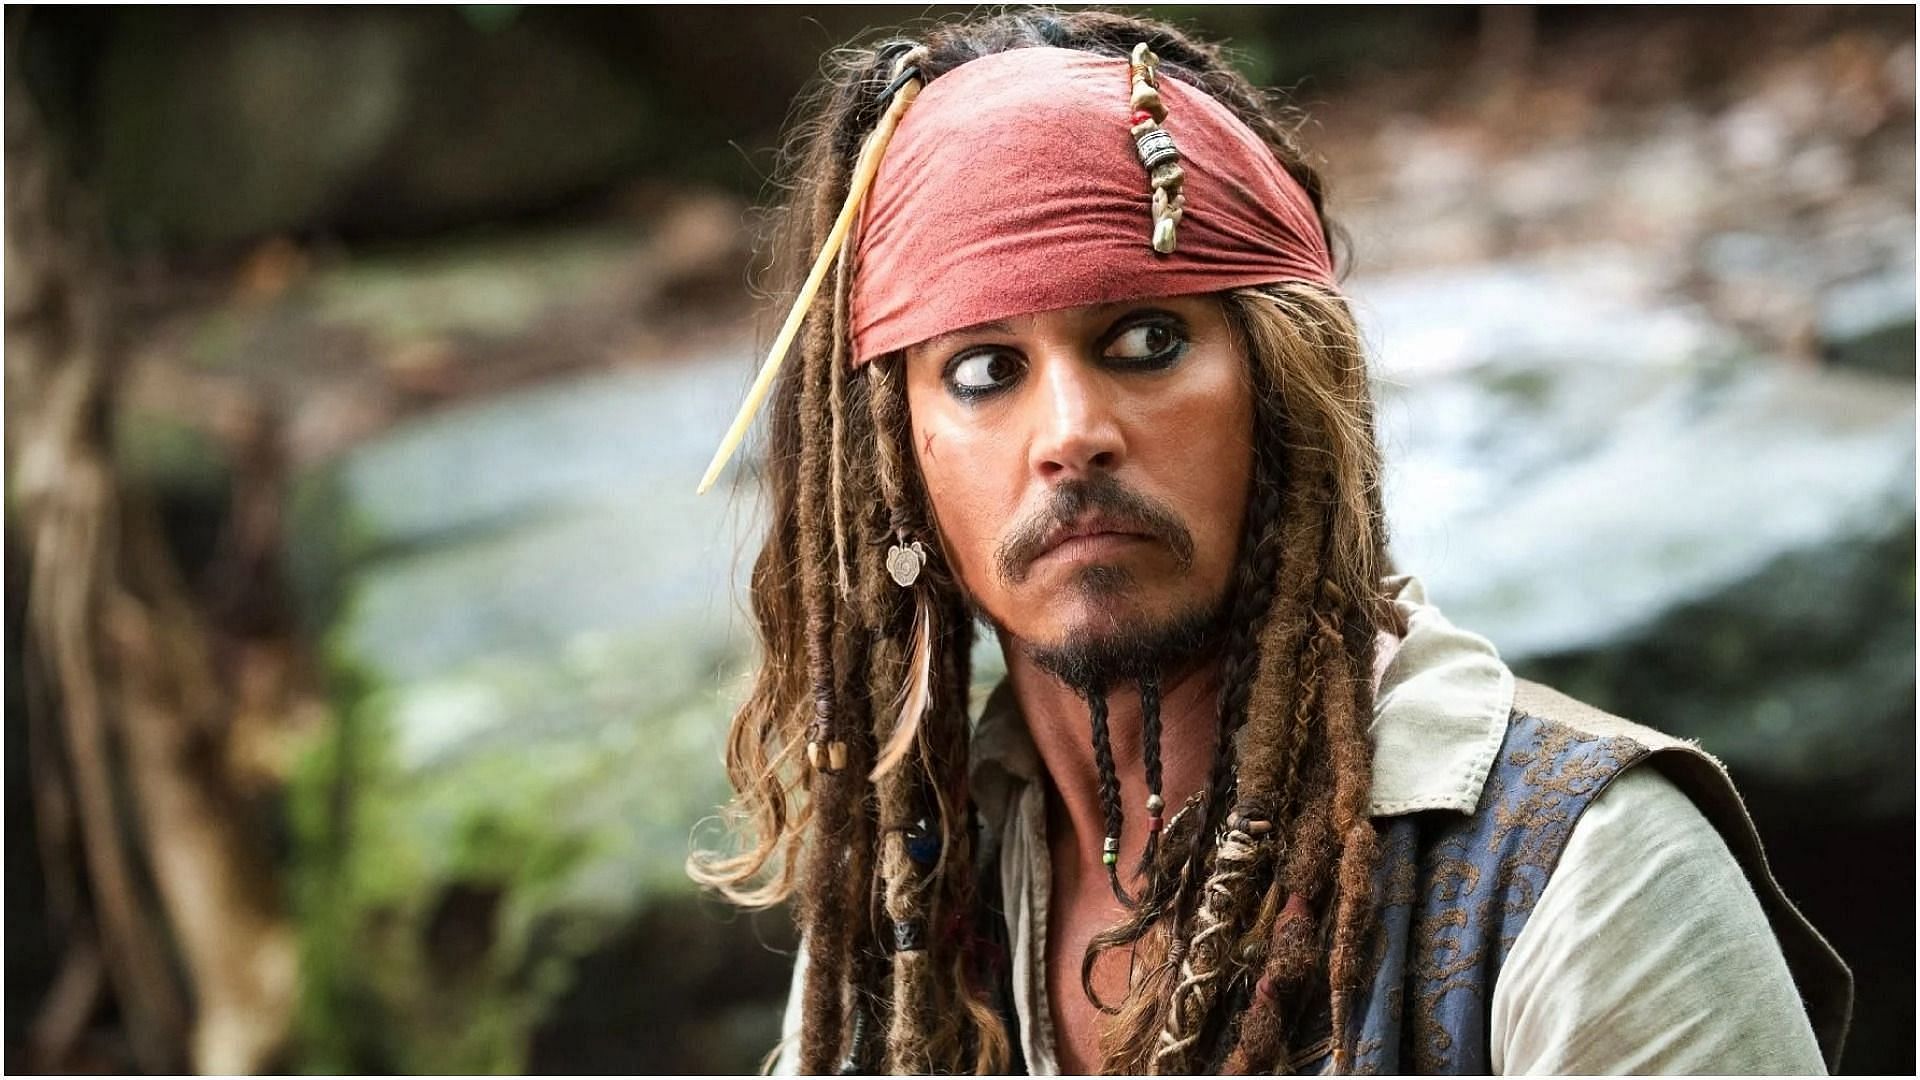 Johnny Depp in the film franchise (Image via The Walt Disney Company)